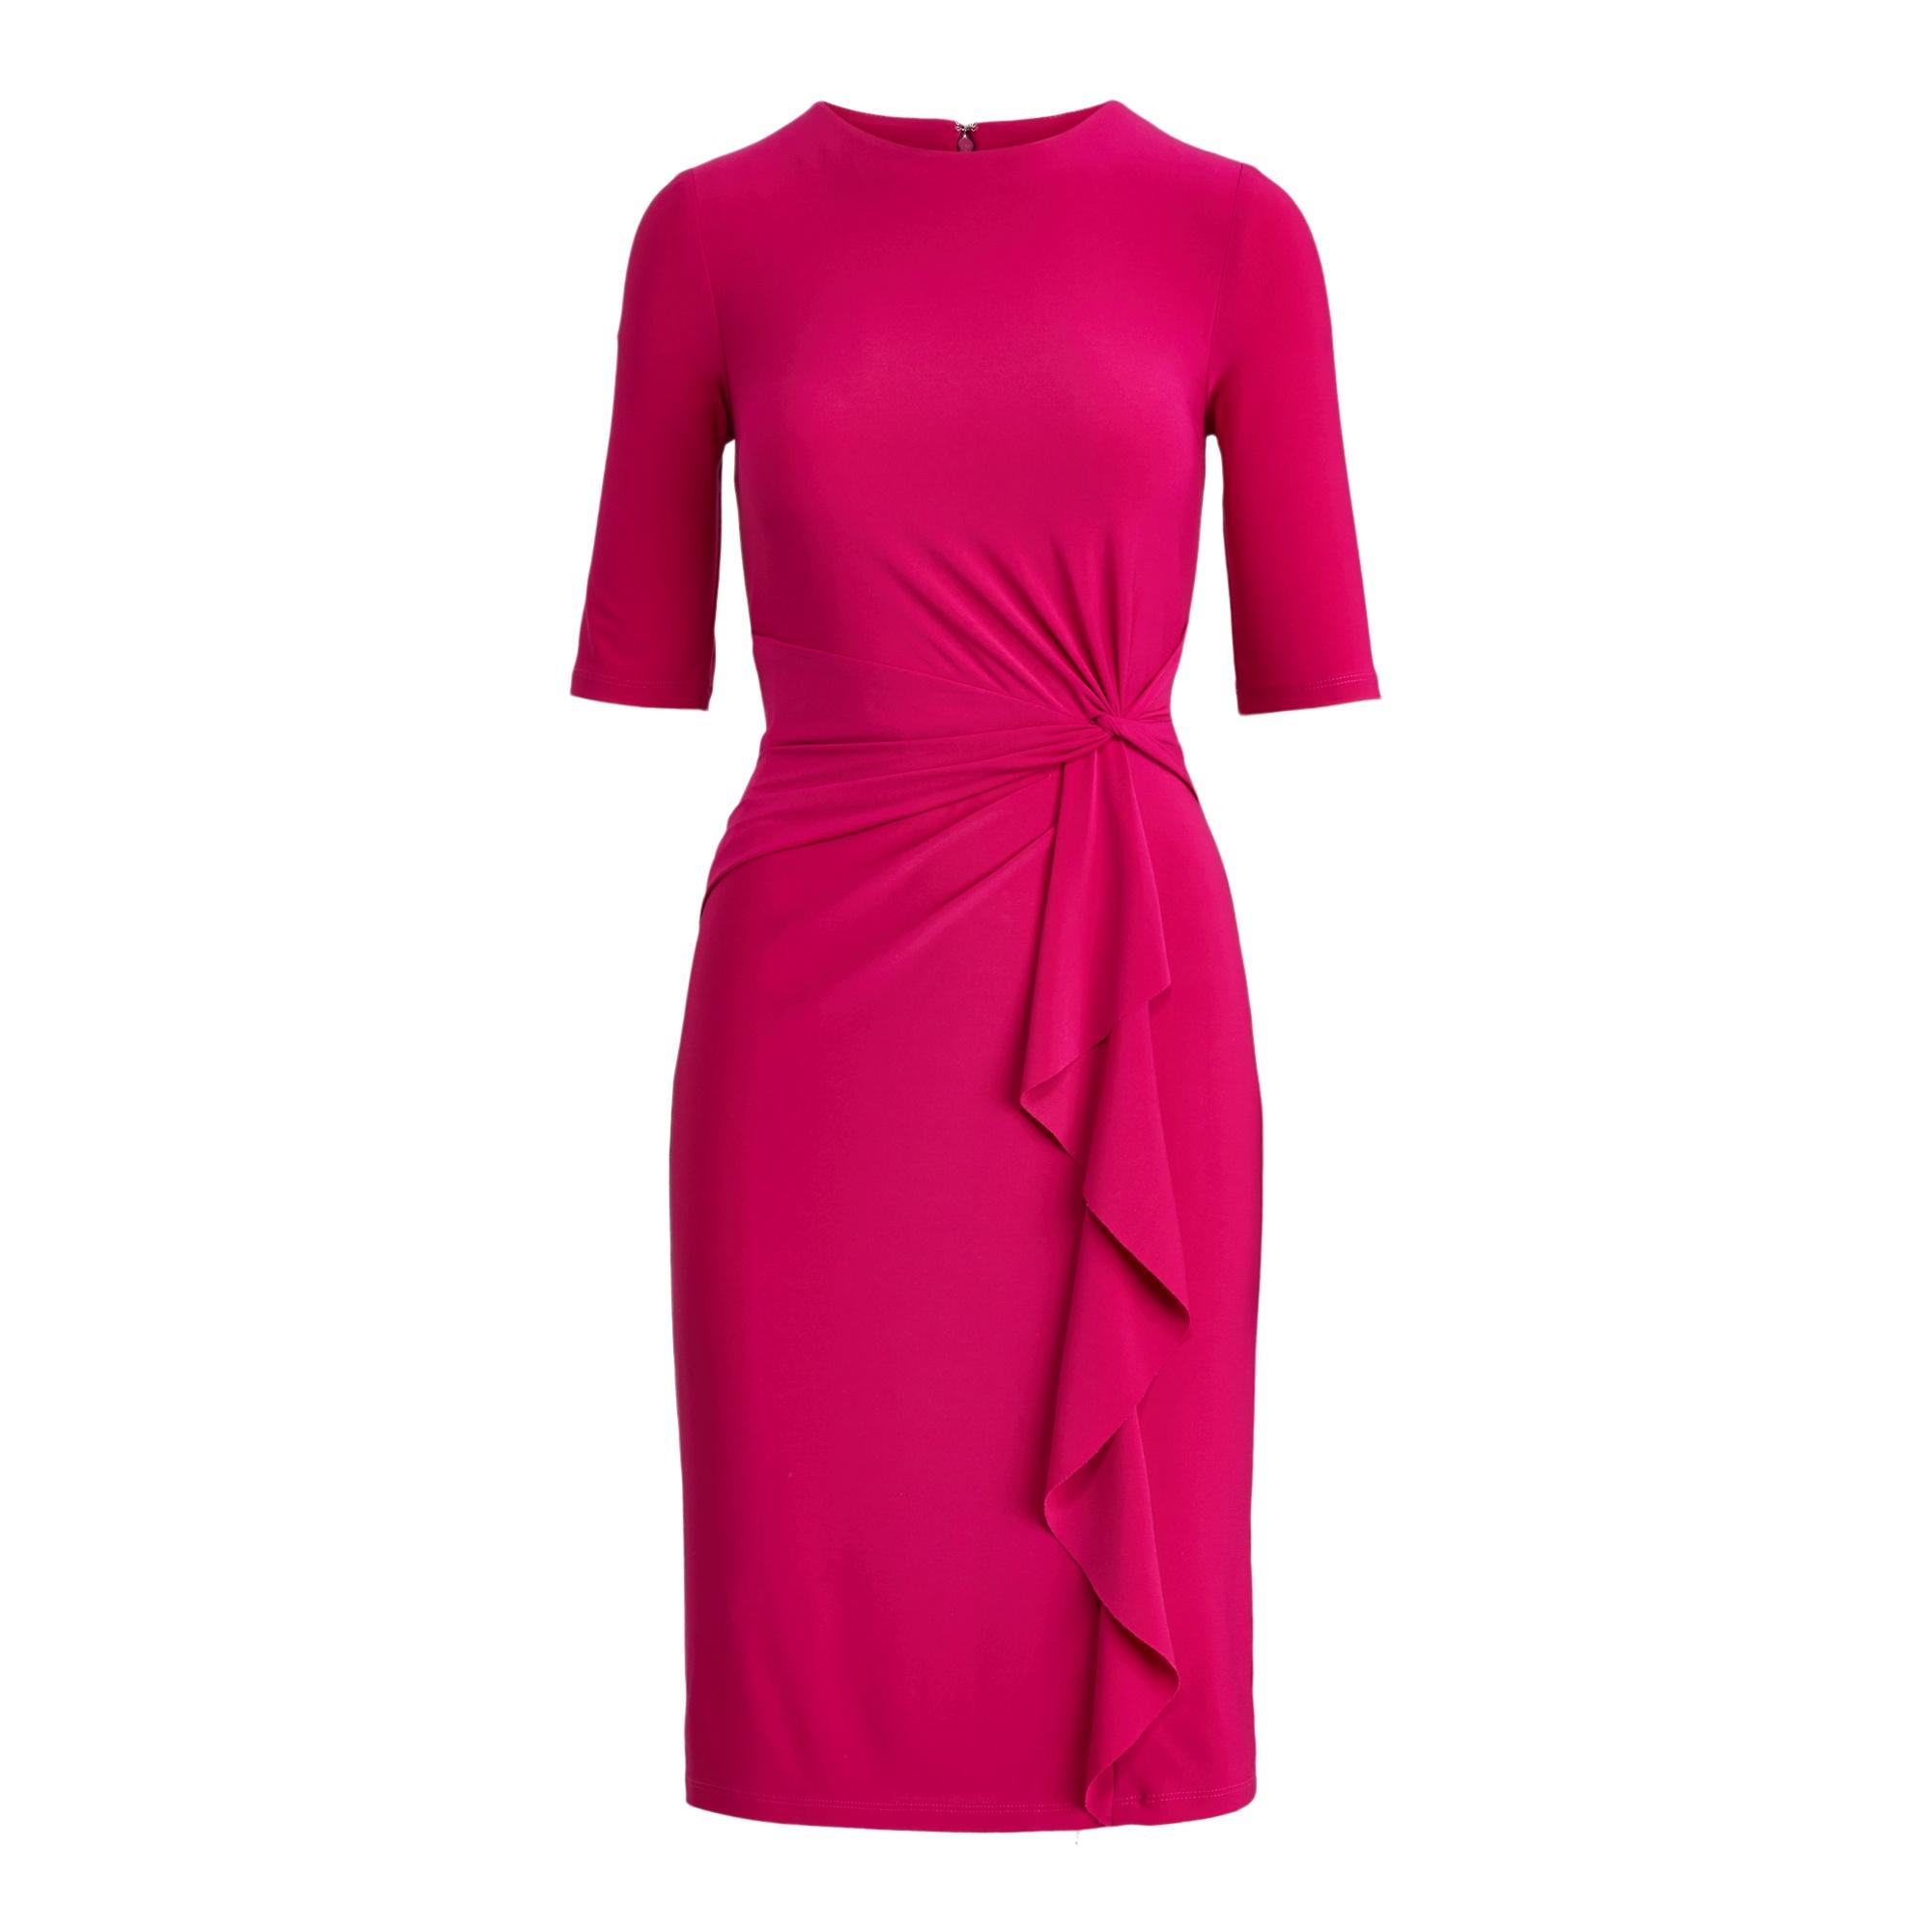 Ralph Lauren Twisted-knot Jersey Dress in Bright Fuchsia (Pink) | Lyst